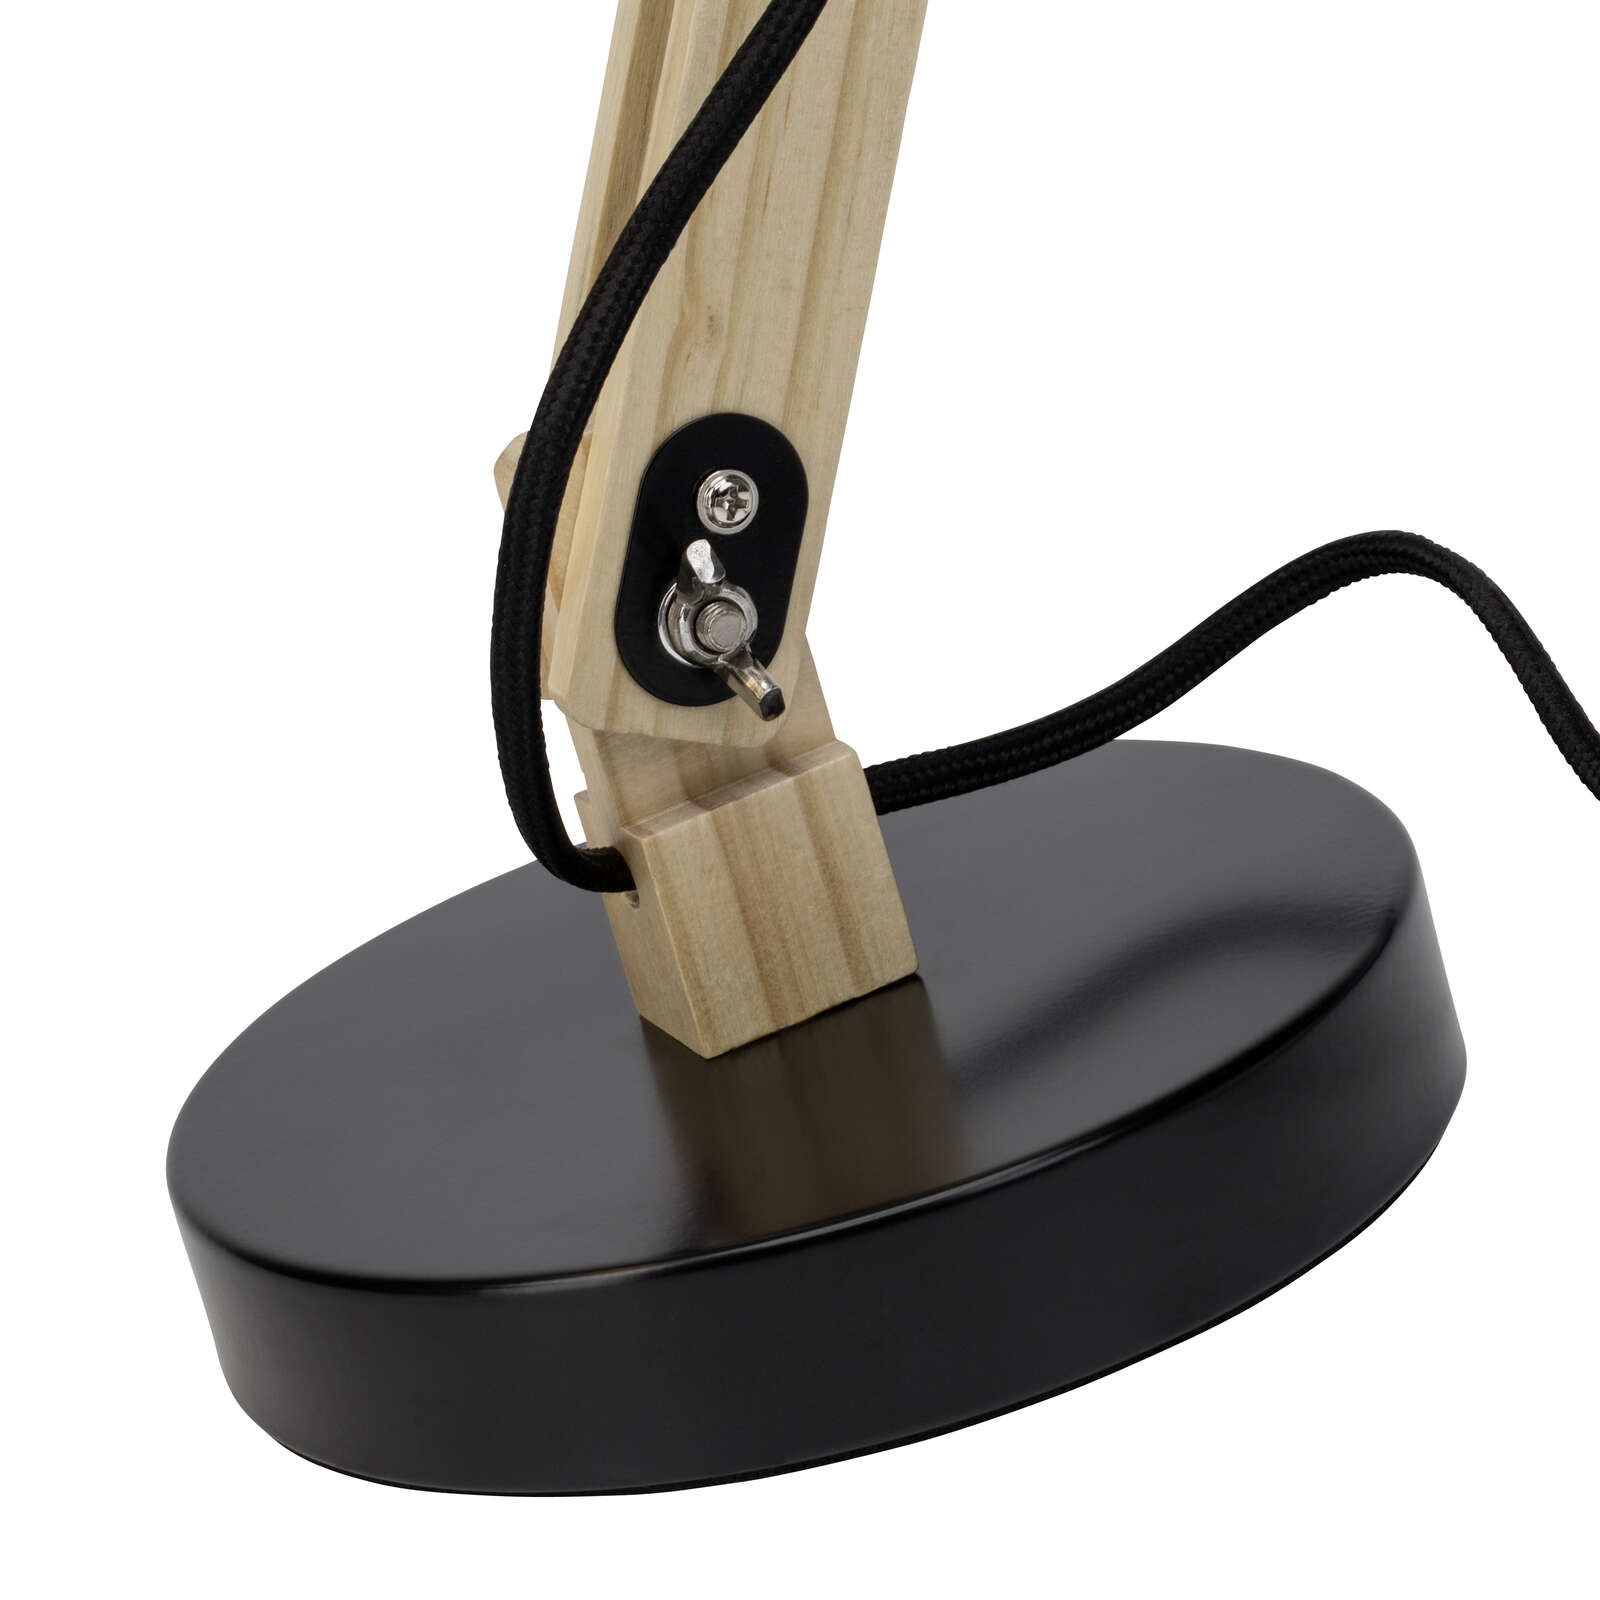             Lámpara de mesa de madera - Lisa 2 - Negro
        